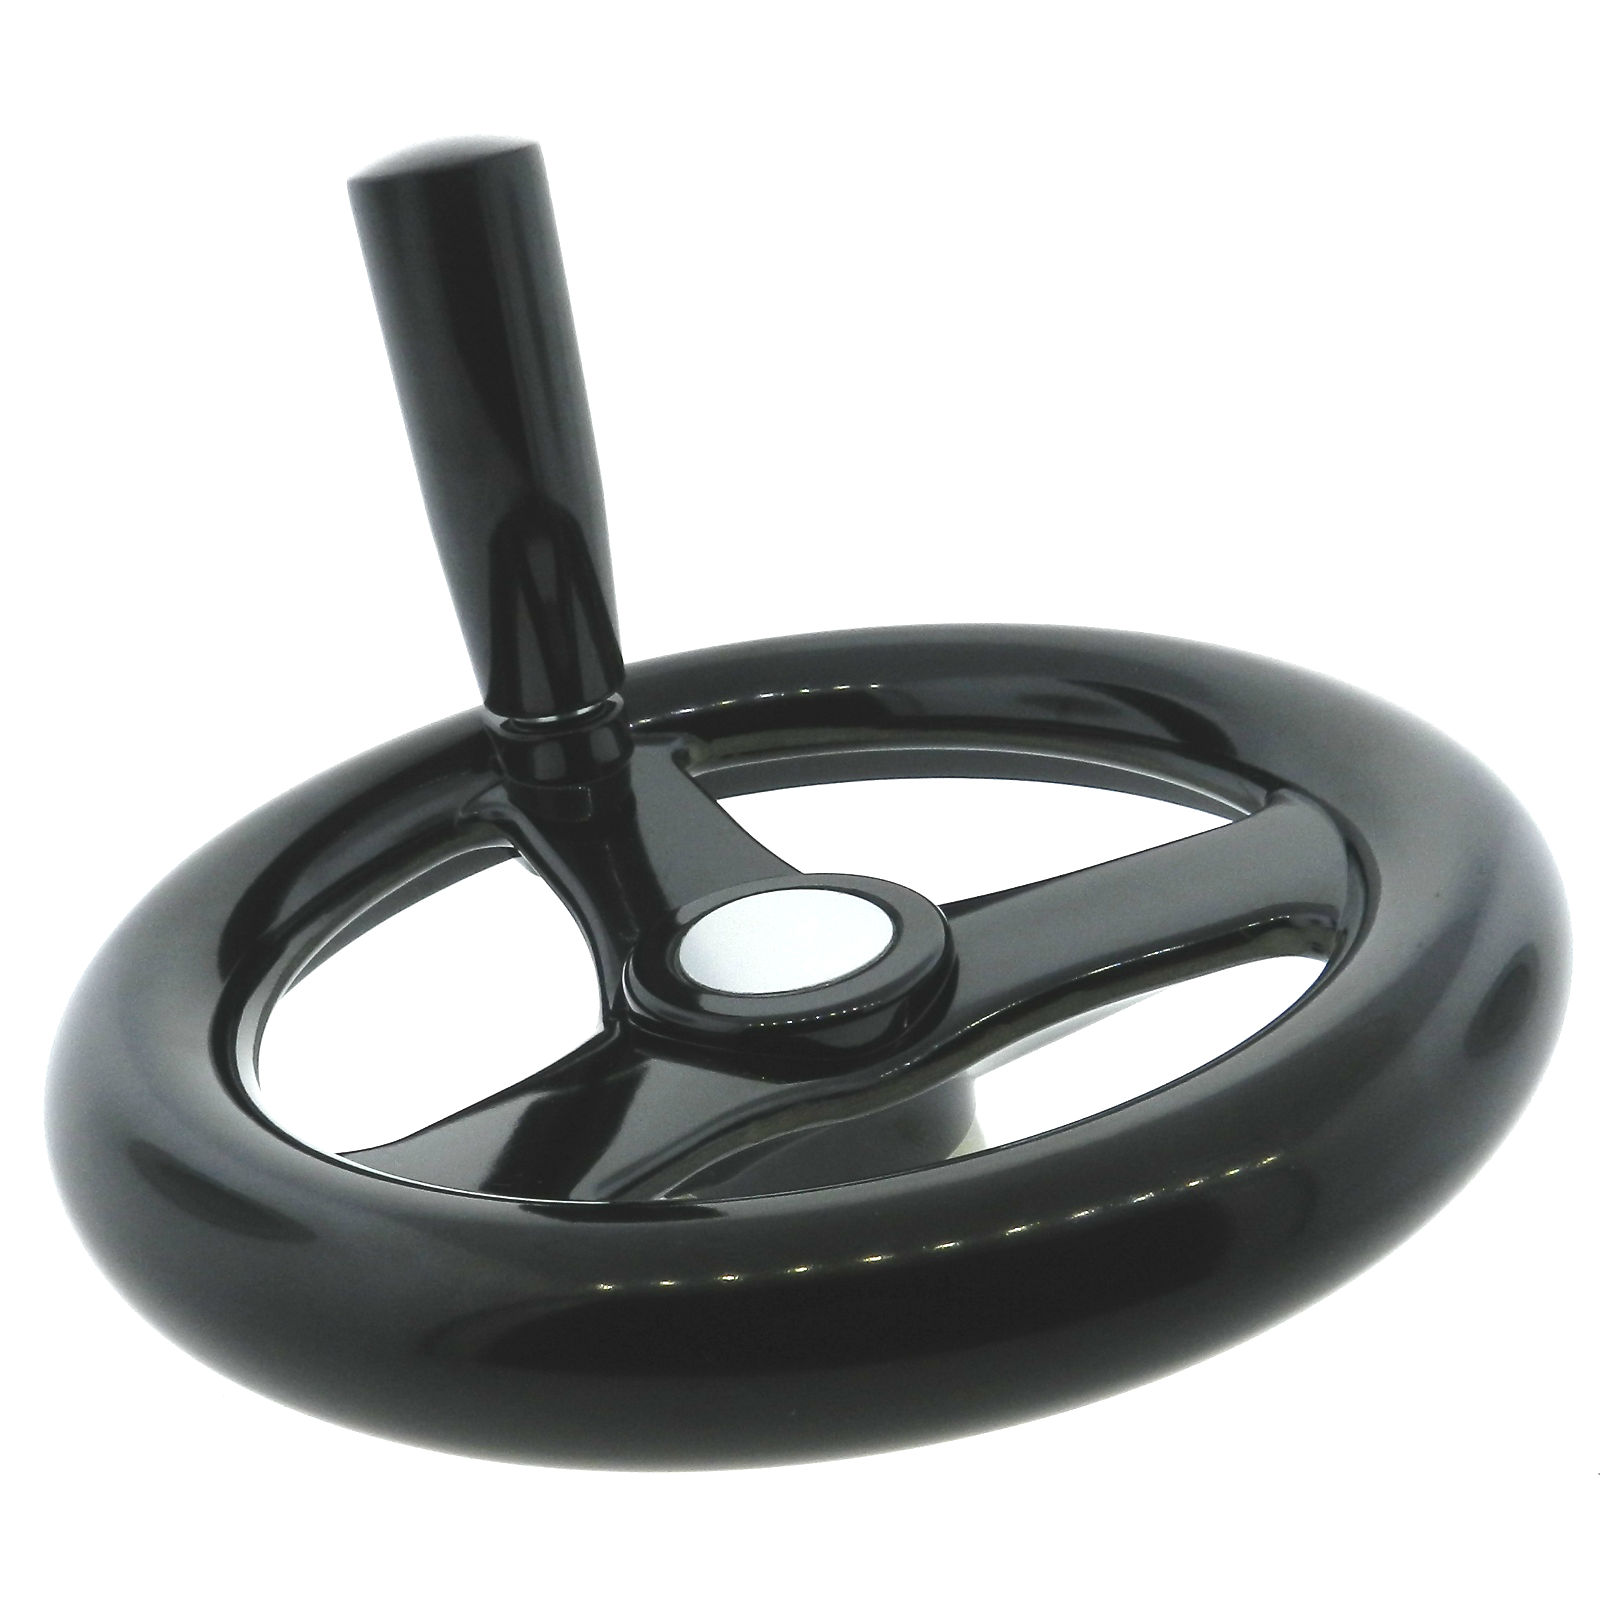 Houseuse Black 12mm x 100mm 3 Spoke Revolving Handle Hand Wheel